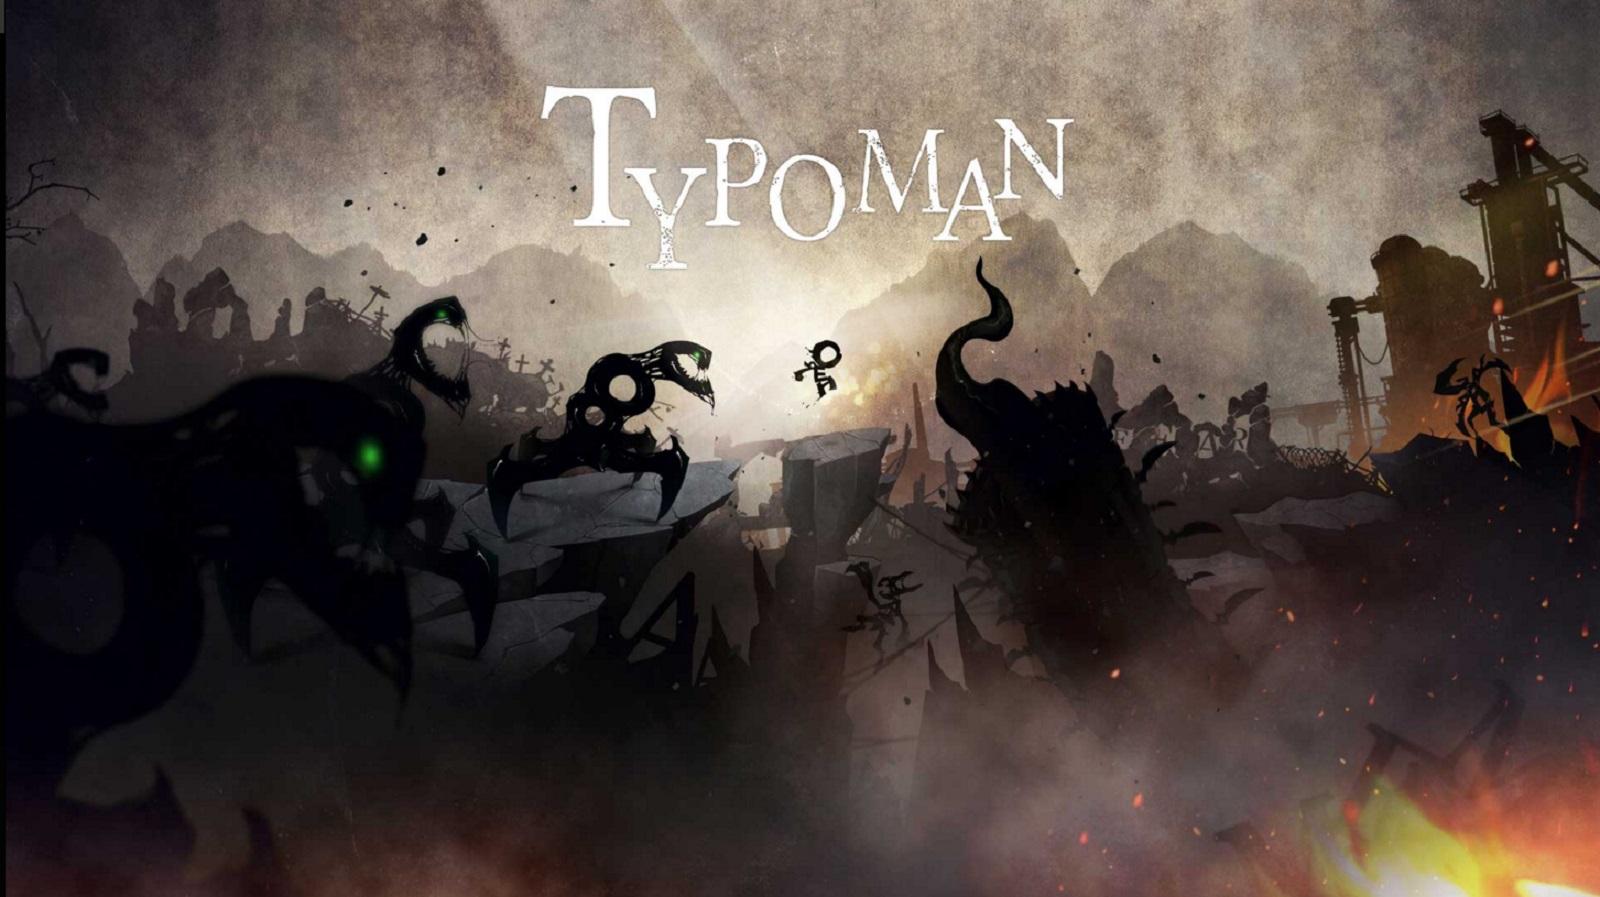 Typoman Fearsome Enemy Gameplay Screenshot Wii U